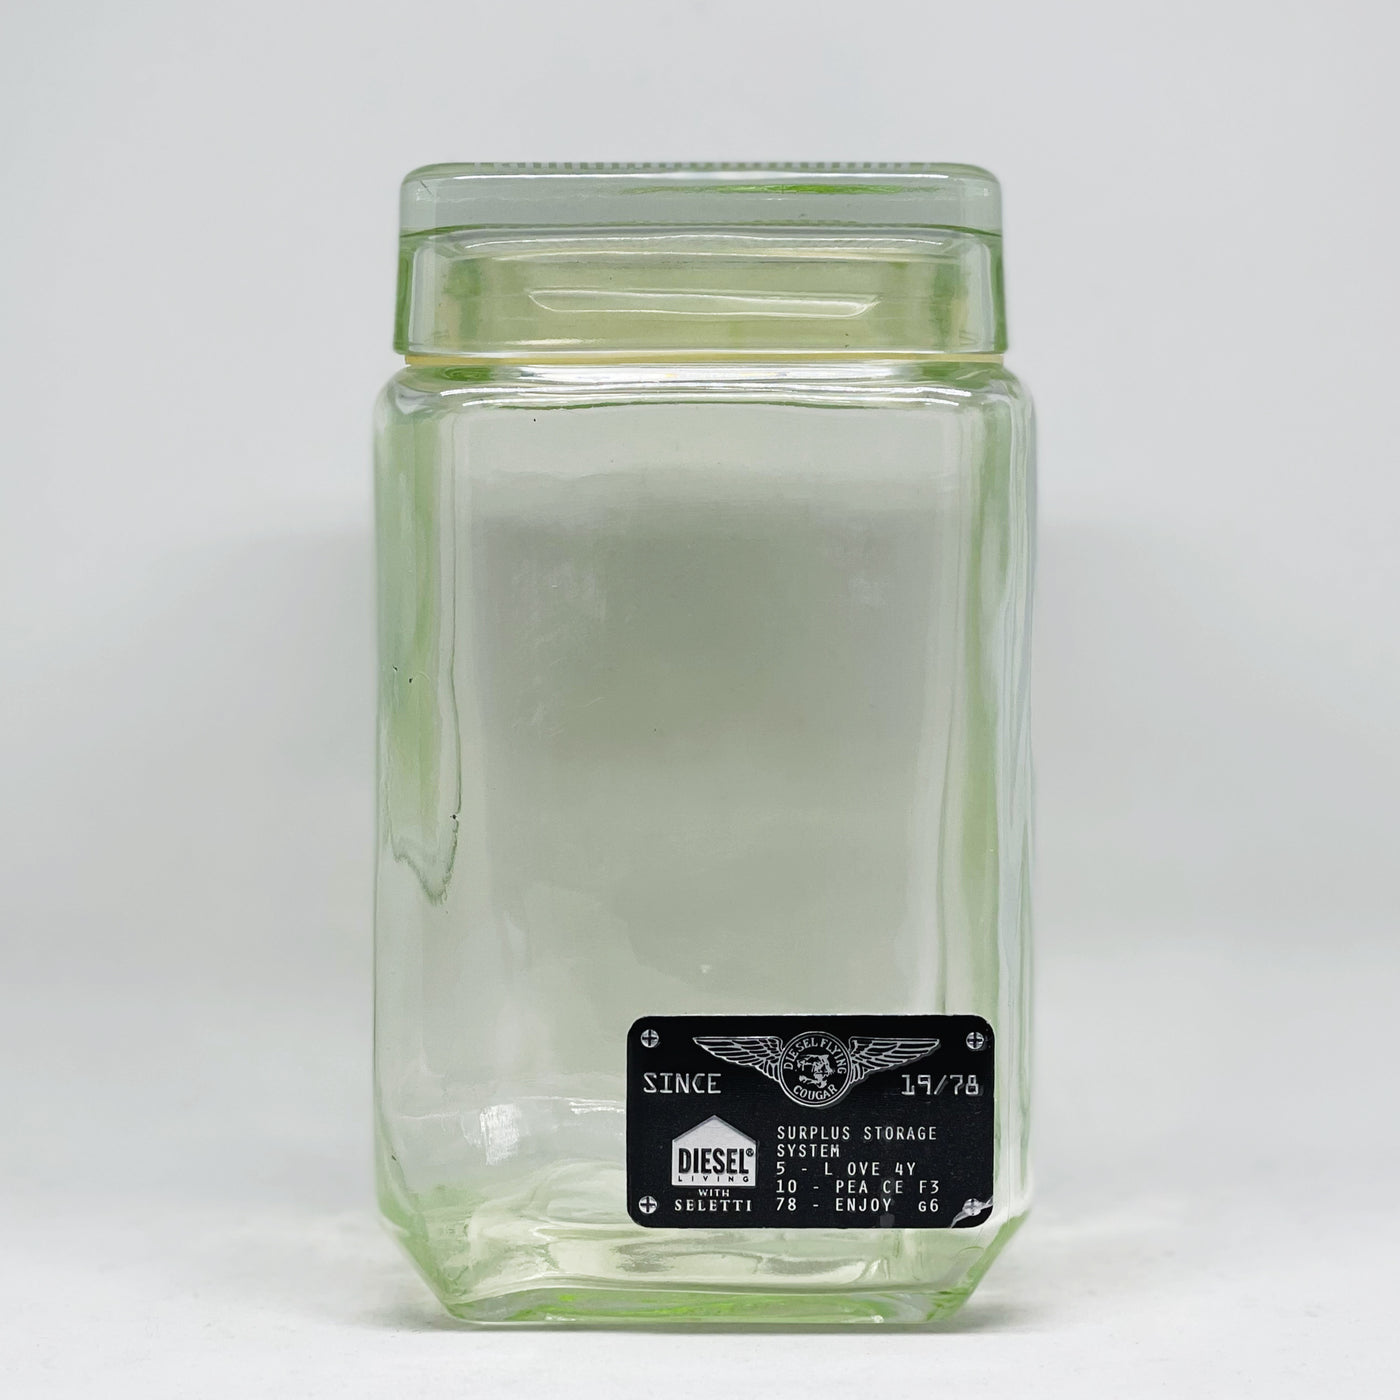 Diesel Surplus Storage System Industrial Glass Jar